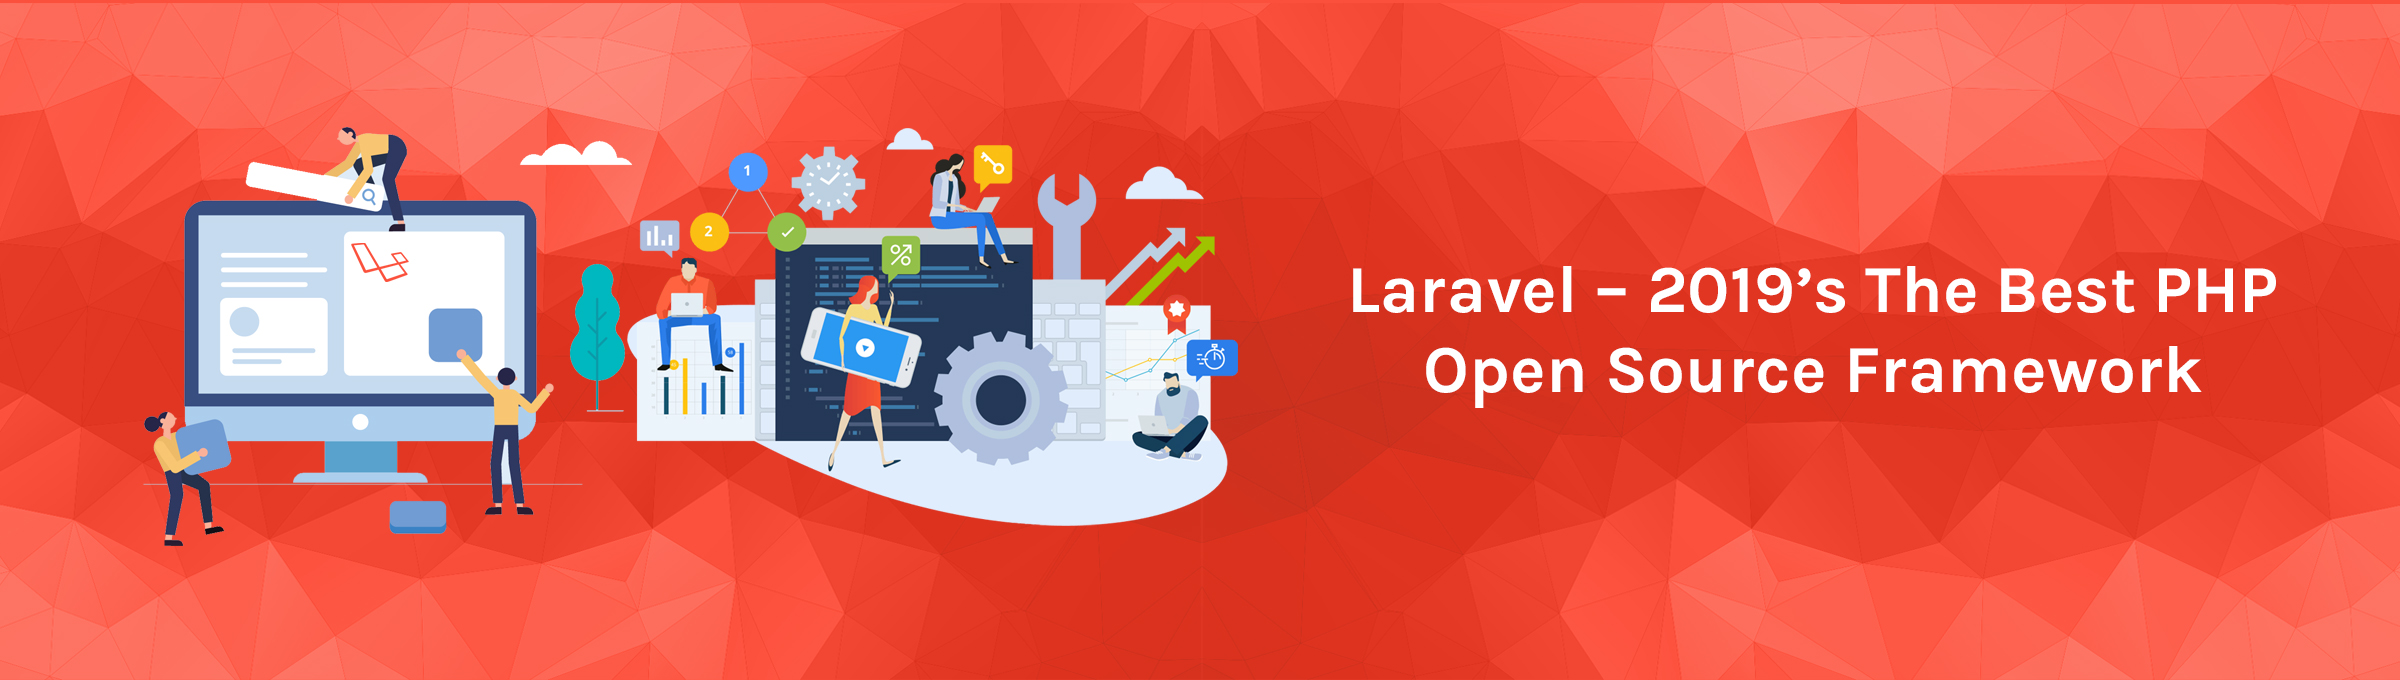 realizziamo portali web con laravel the best php framework